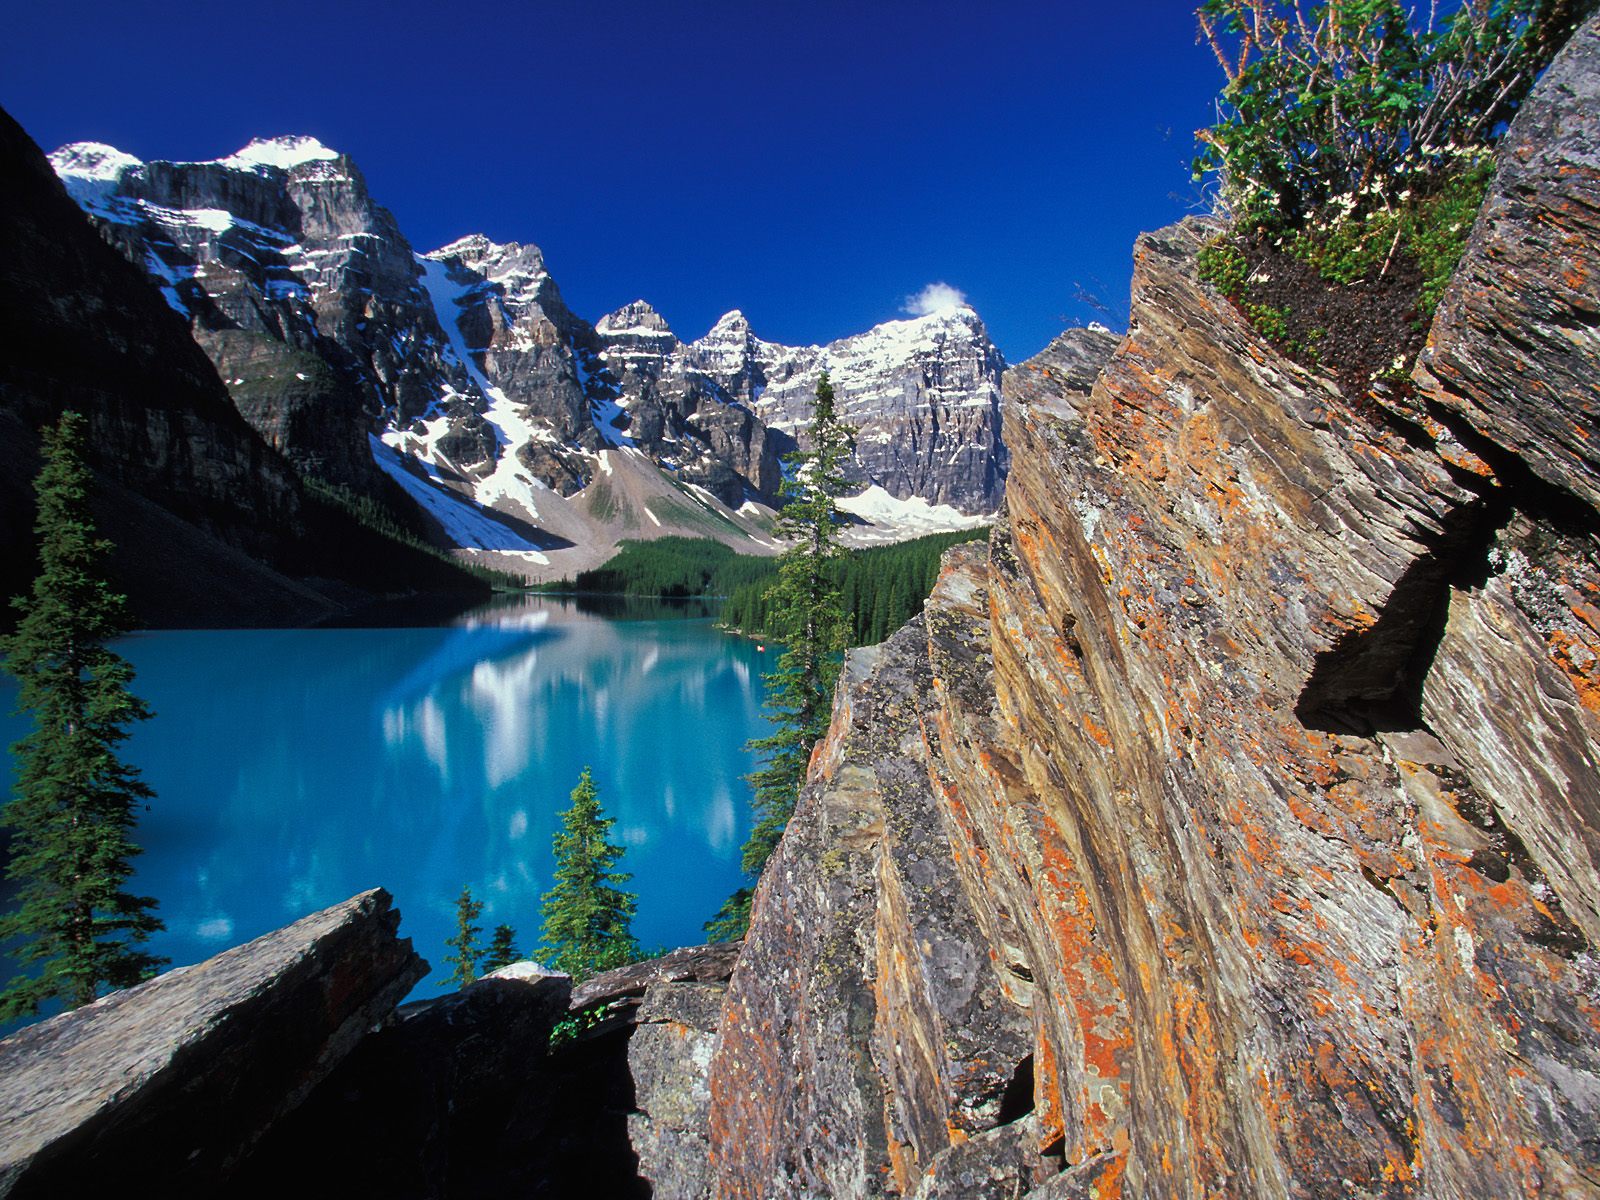  Ten Peaks Banff National Park Canada Wallpaper   Free HQ Wallpapers